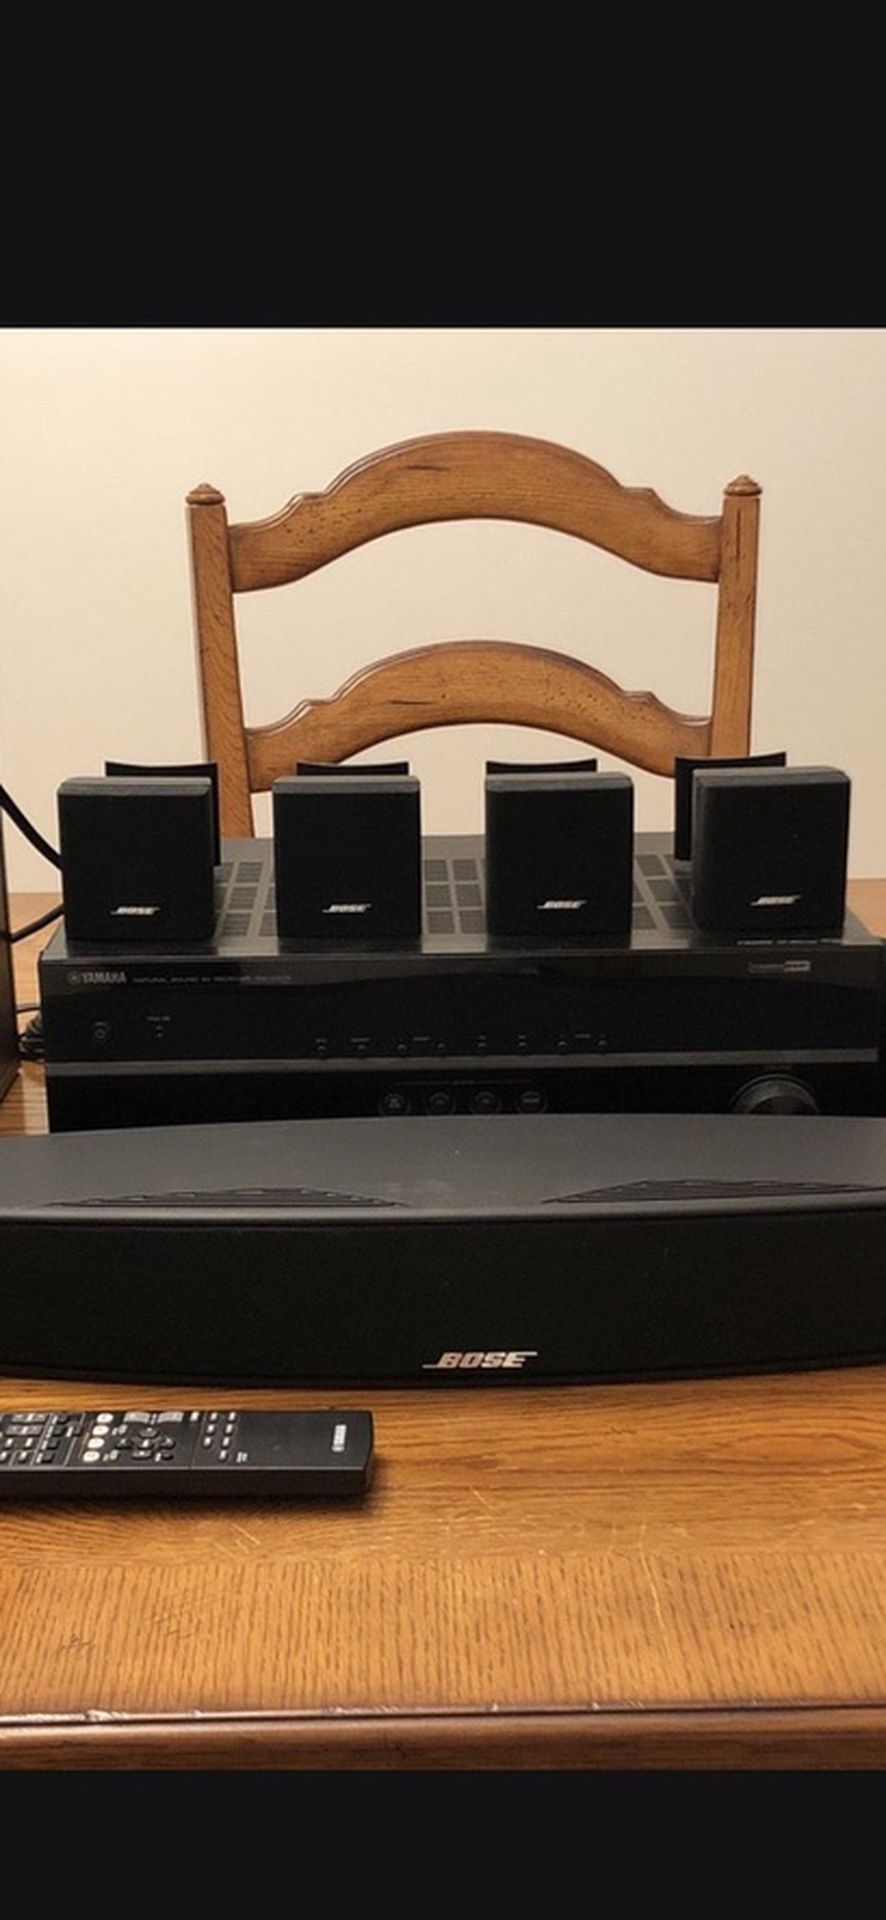 Bose Surround Sound Satilite 7.1 Speakers / Yamaha Receiver